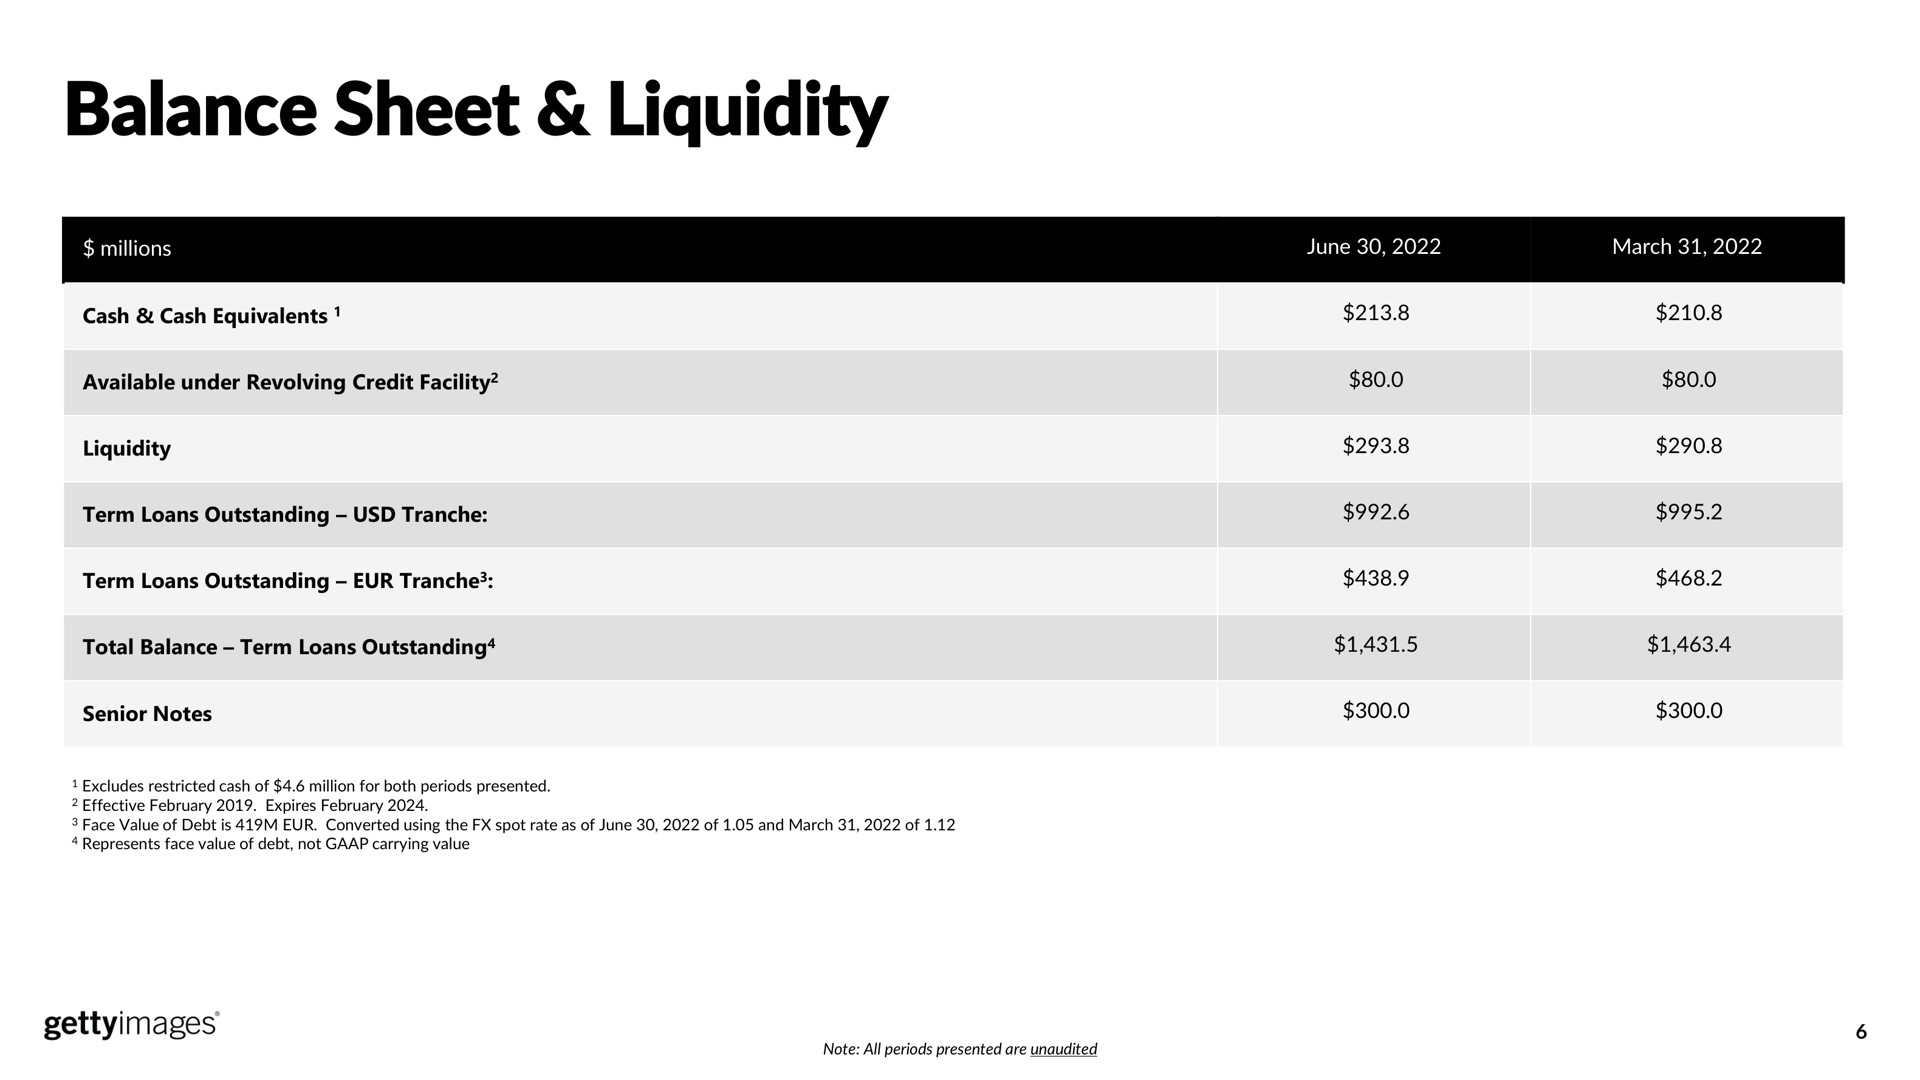 balance sheet liquidity | Getty